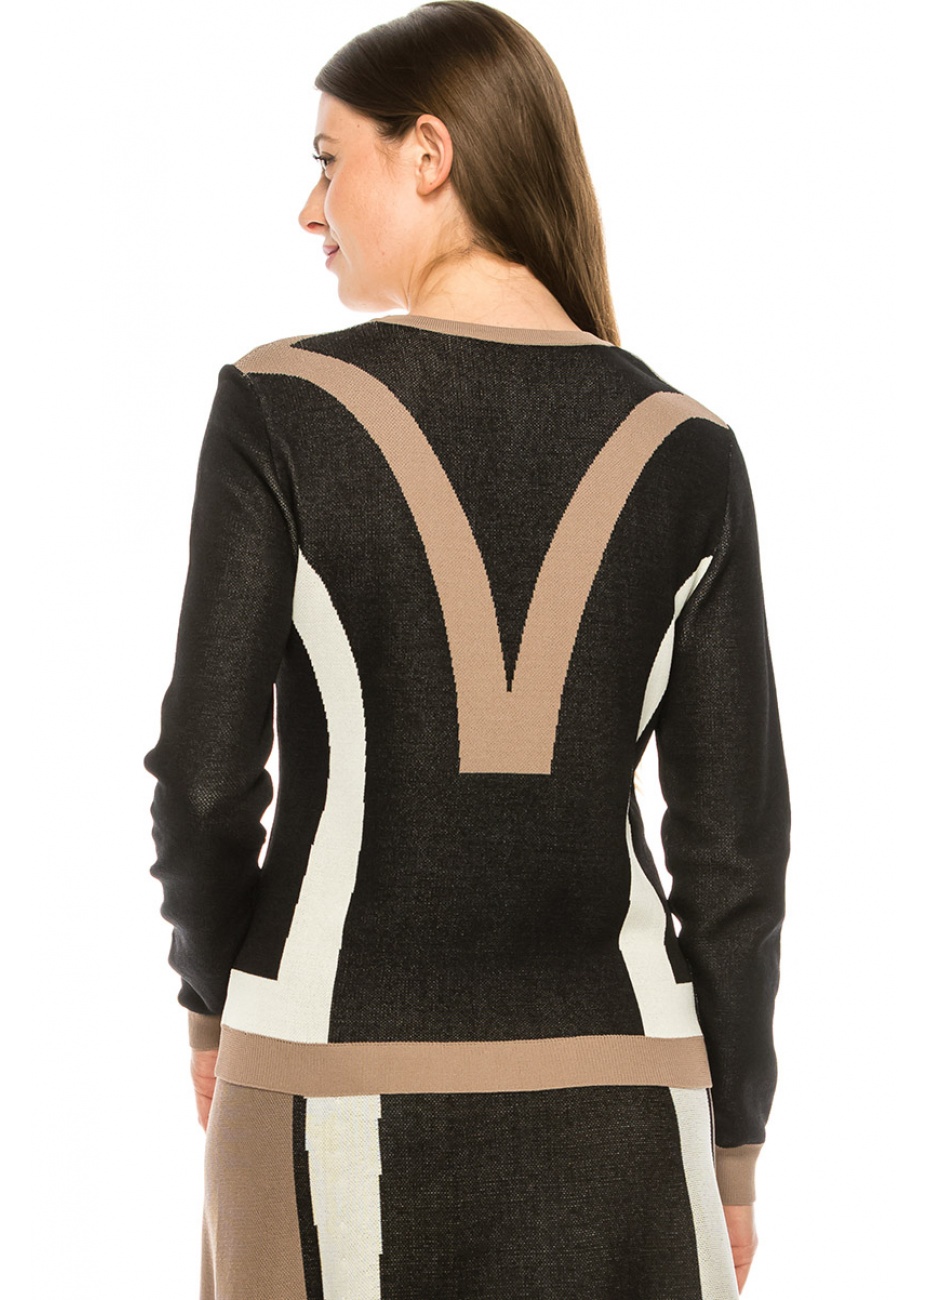 Sweater KA146-Black